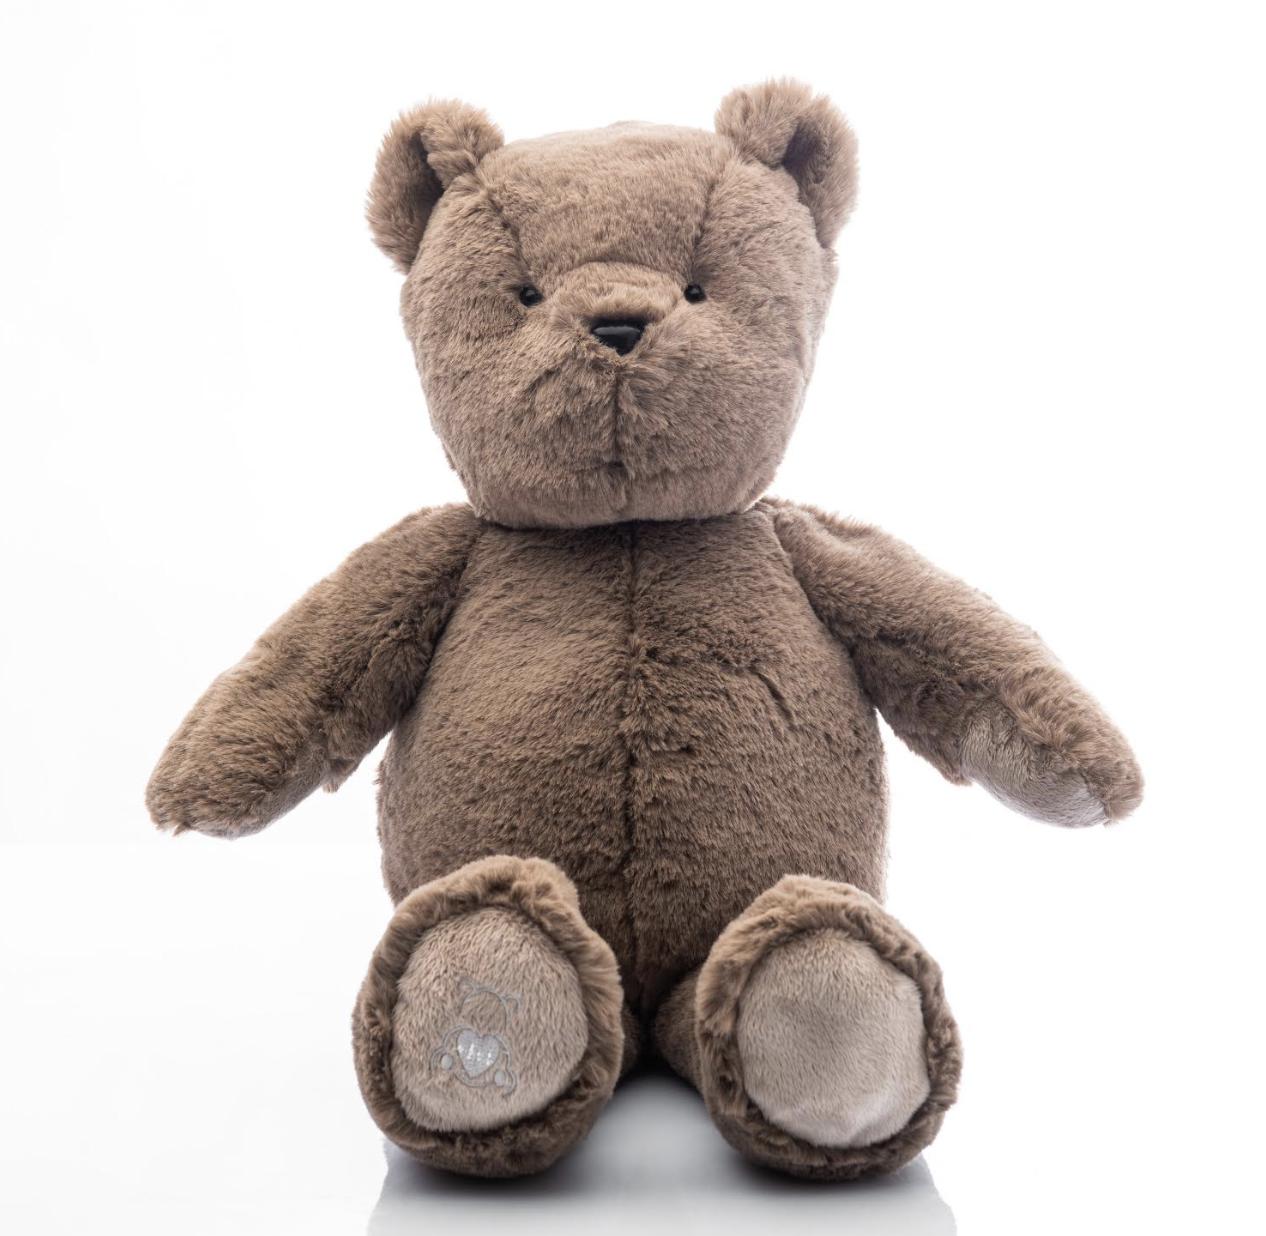 teddy bear with heartbeat sound